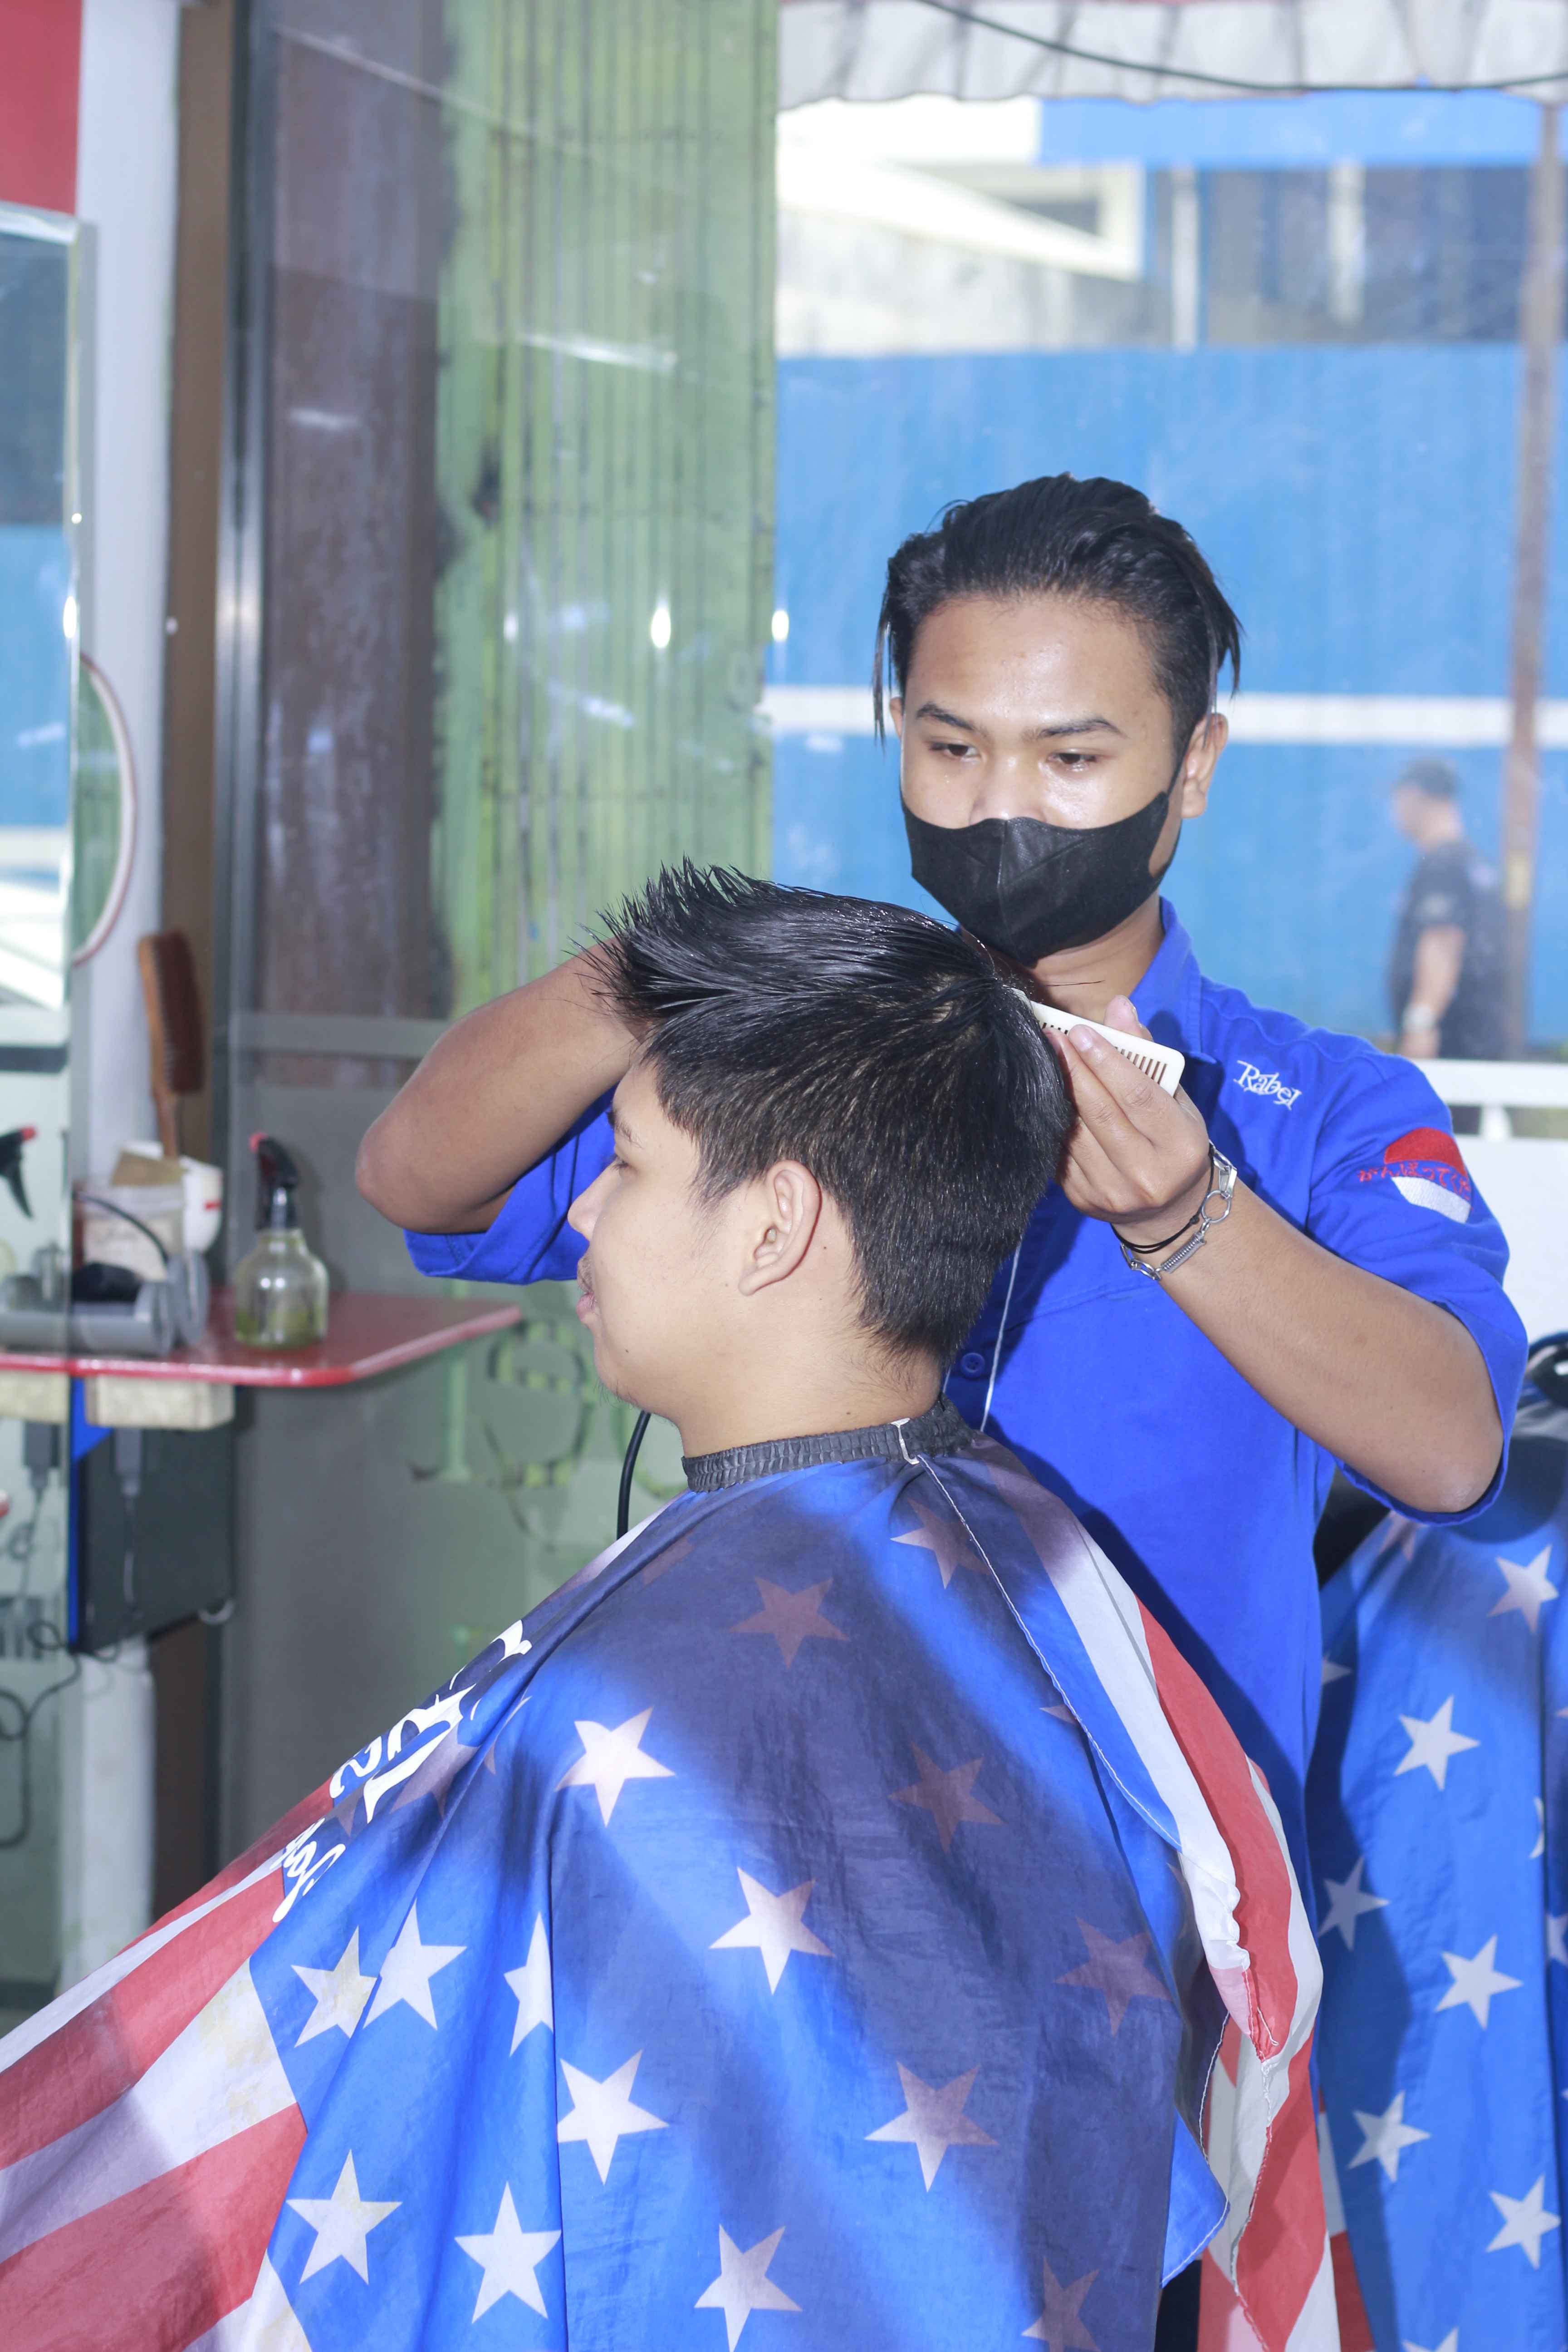 Harga Potong Rambut Di Kota Malang Keren